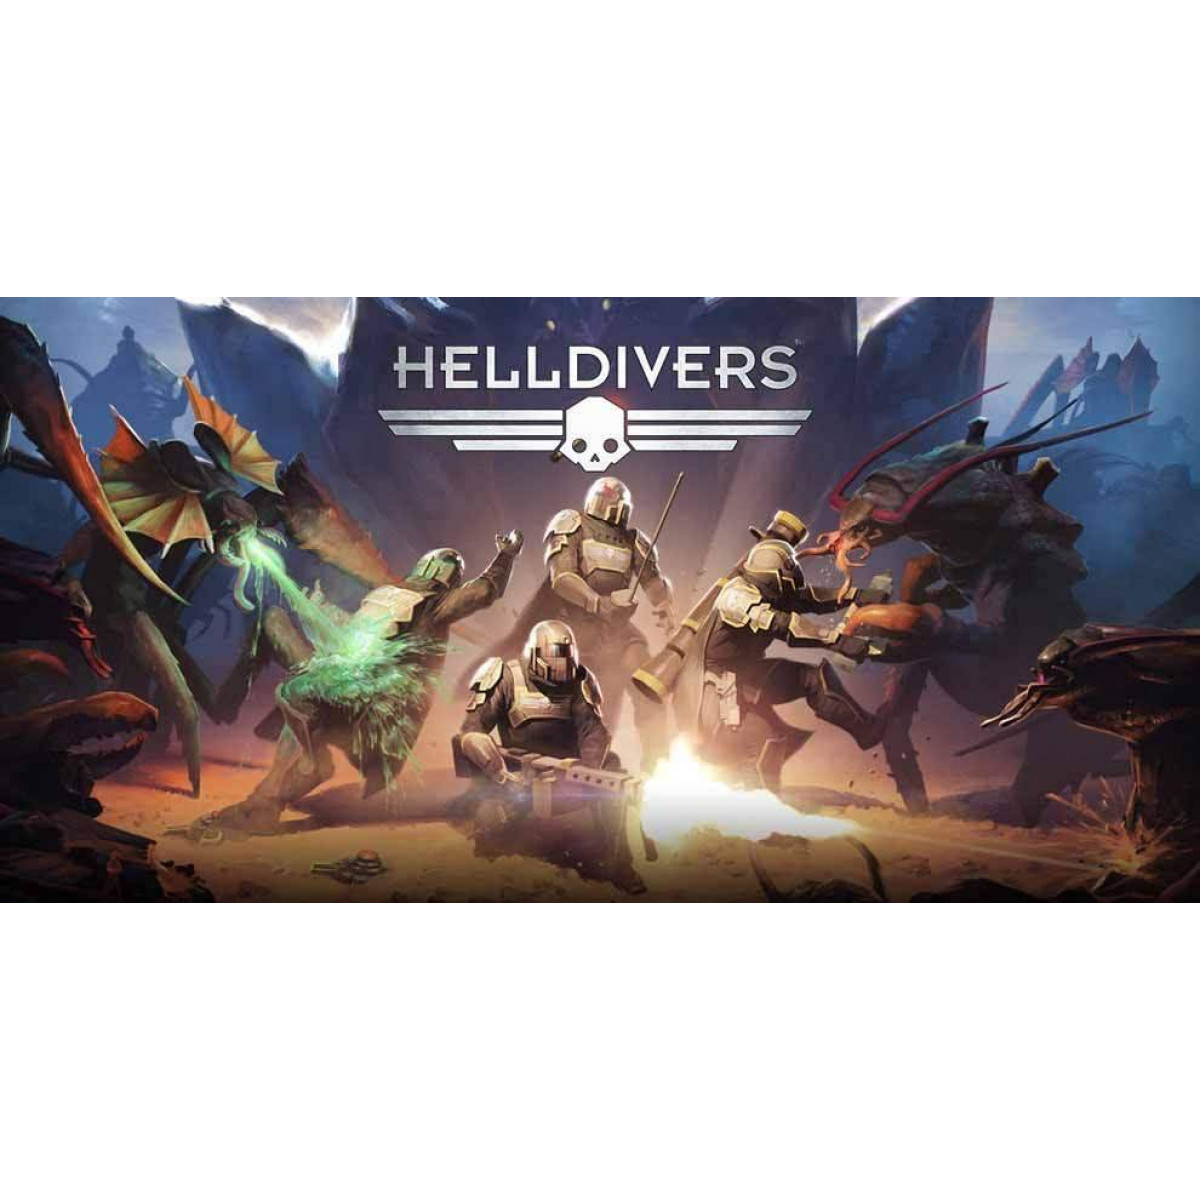 DLC Helldivers 2. Helldivers 1. Helldivers персонажи арт. Helldivers геймплей. Helldivers перевод